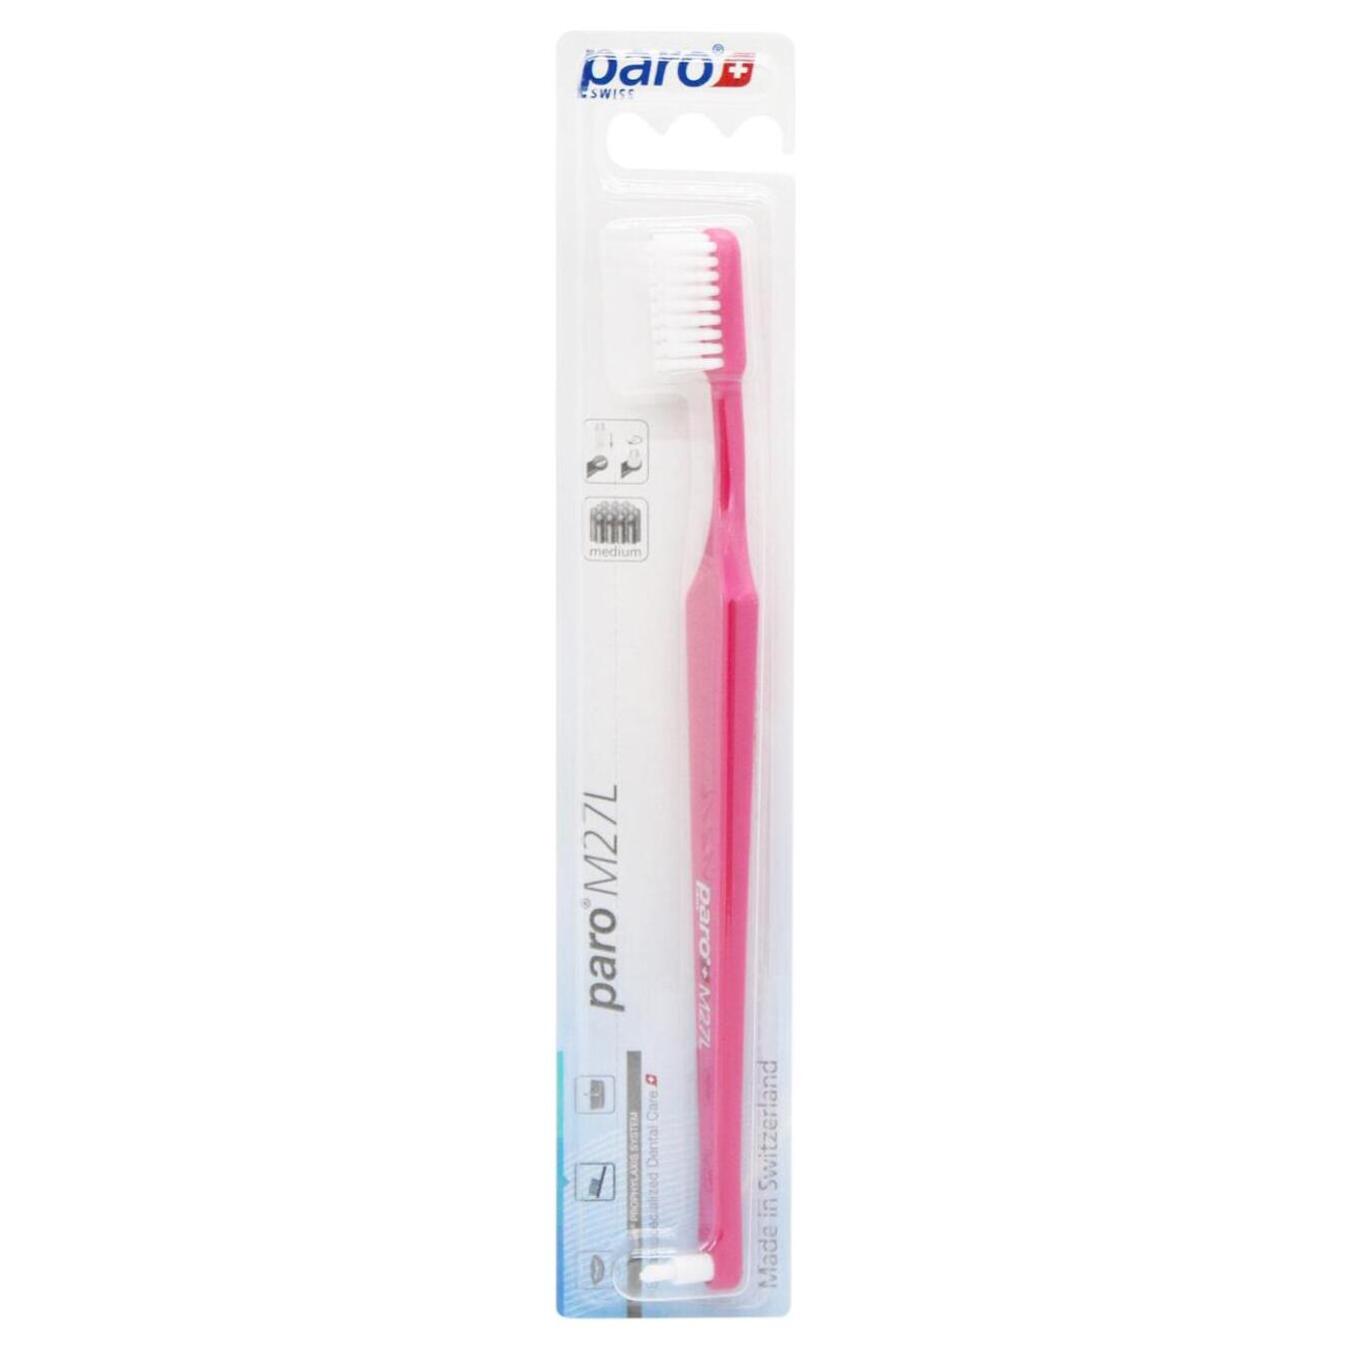 Toothbrush Paro soft 27 bundles of bristles 3 rows with monobundle nozzle M27L pink